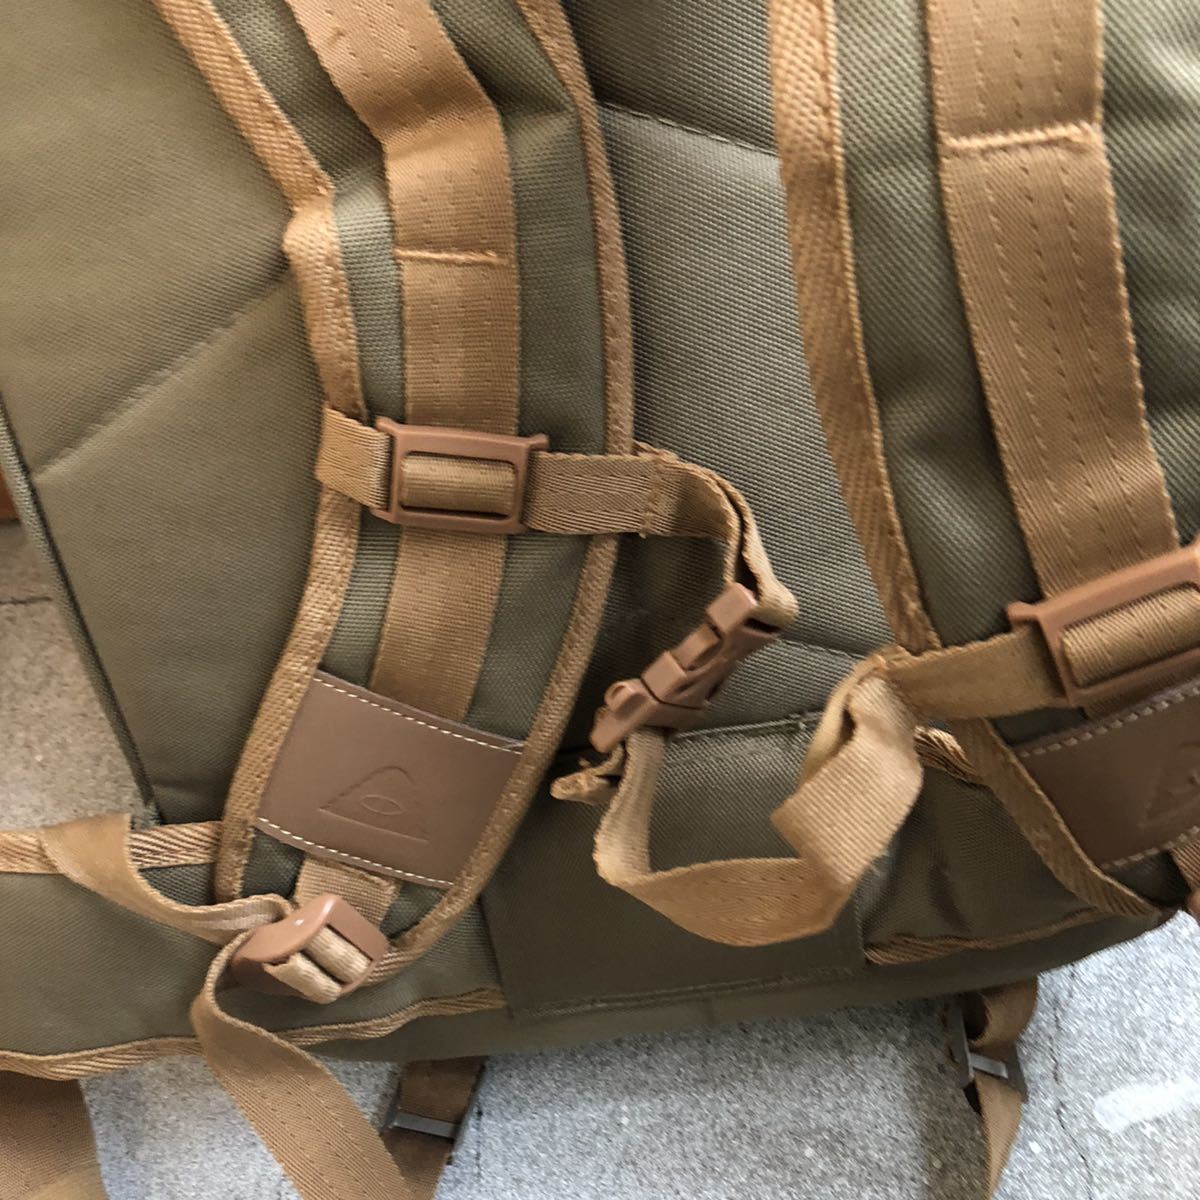 POLER Pola -OUTDOOR STUFF CAMP VIBES camp bag rucksack backpack outdoor gear camp gear storage inner bag attaching 